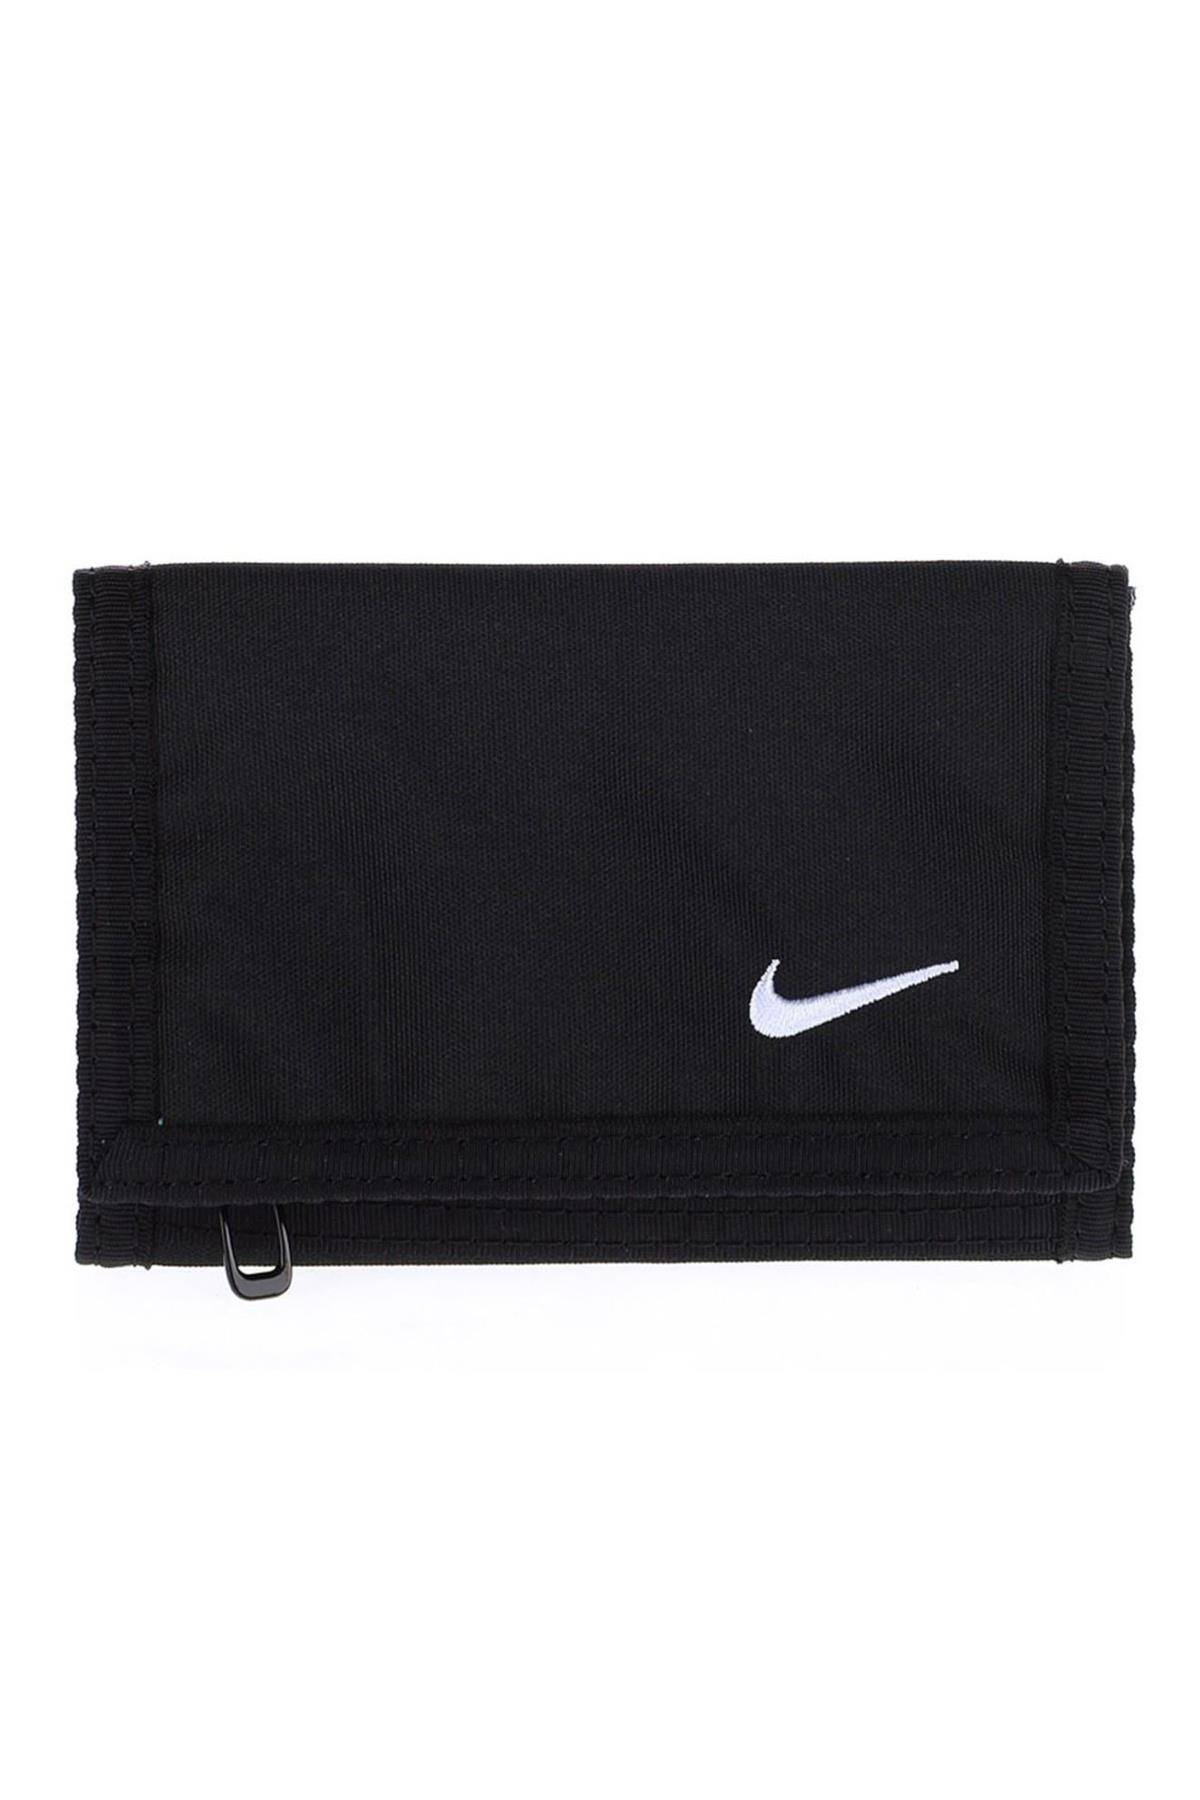 Nike Basic Wallet Spor Cüzdan Siyah